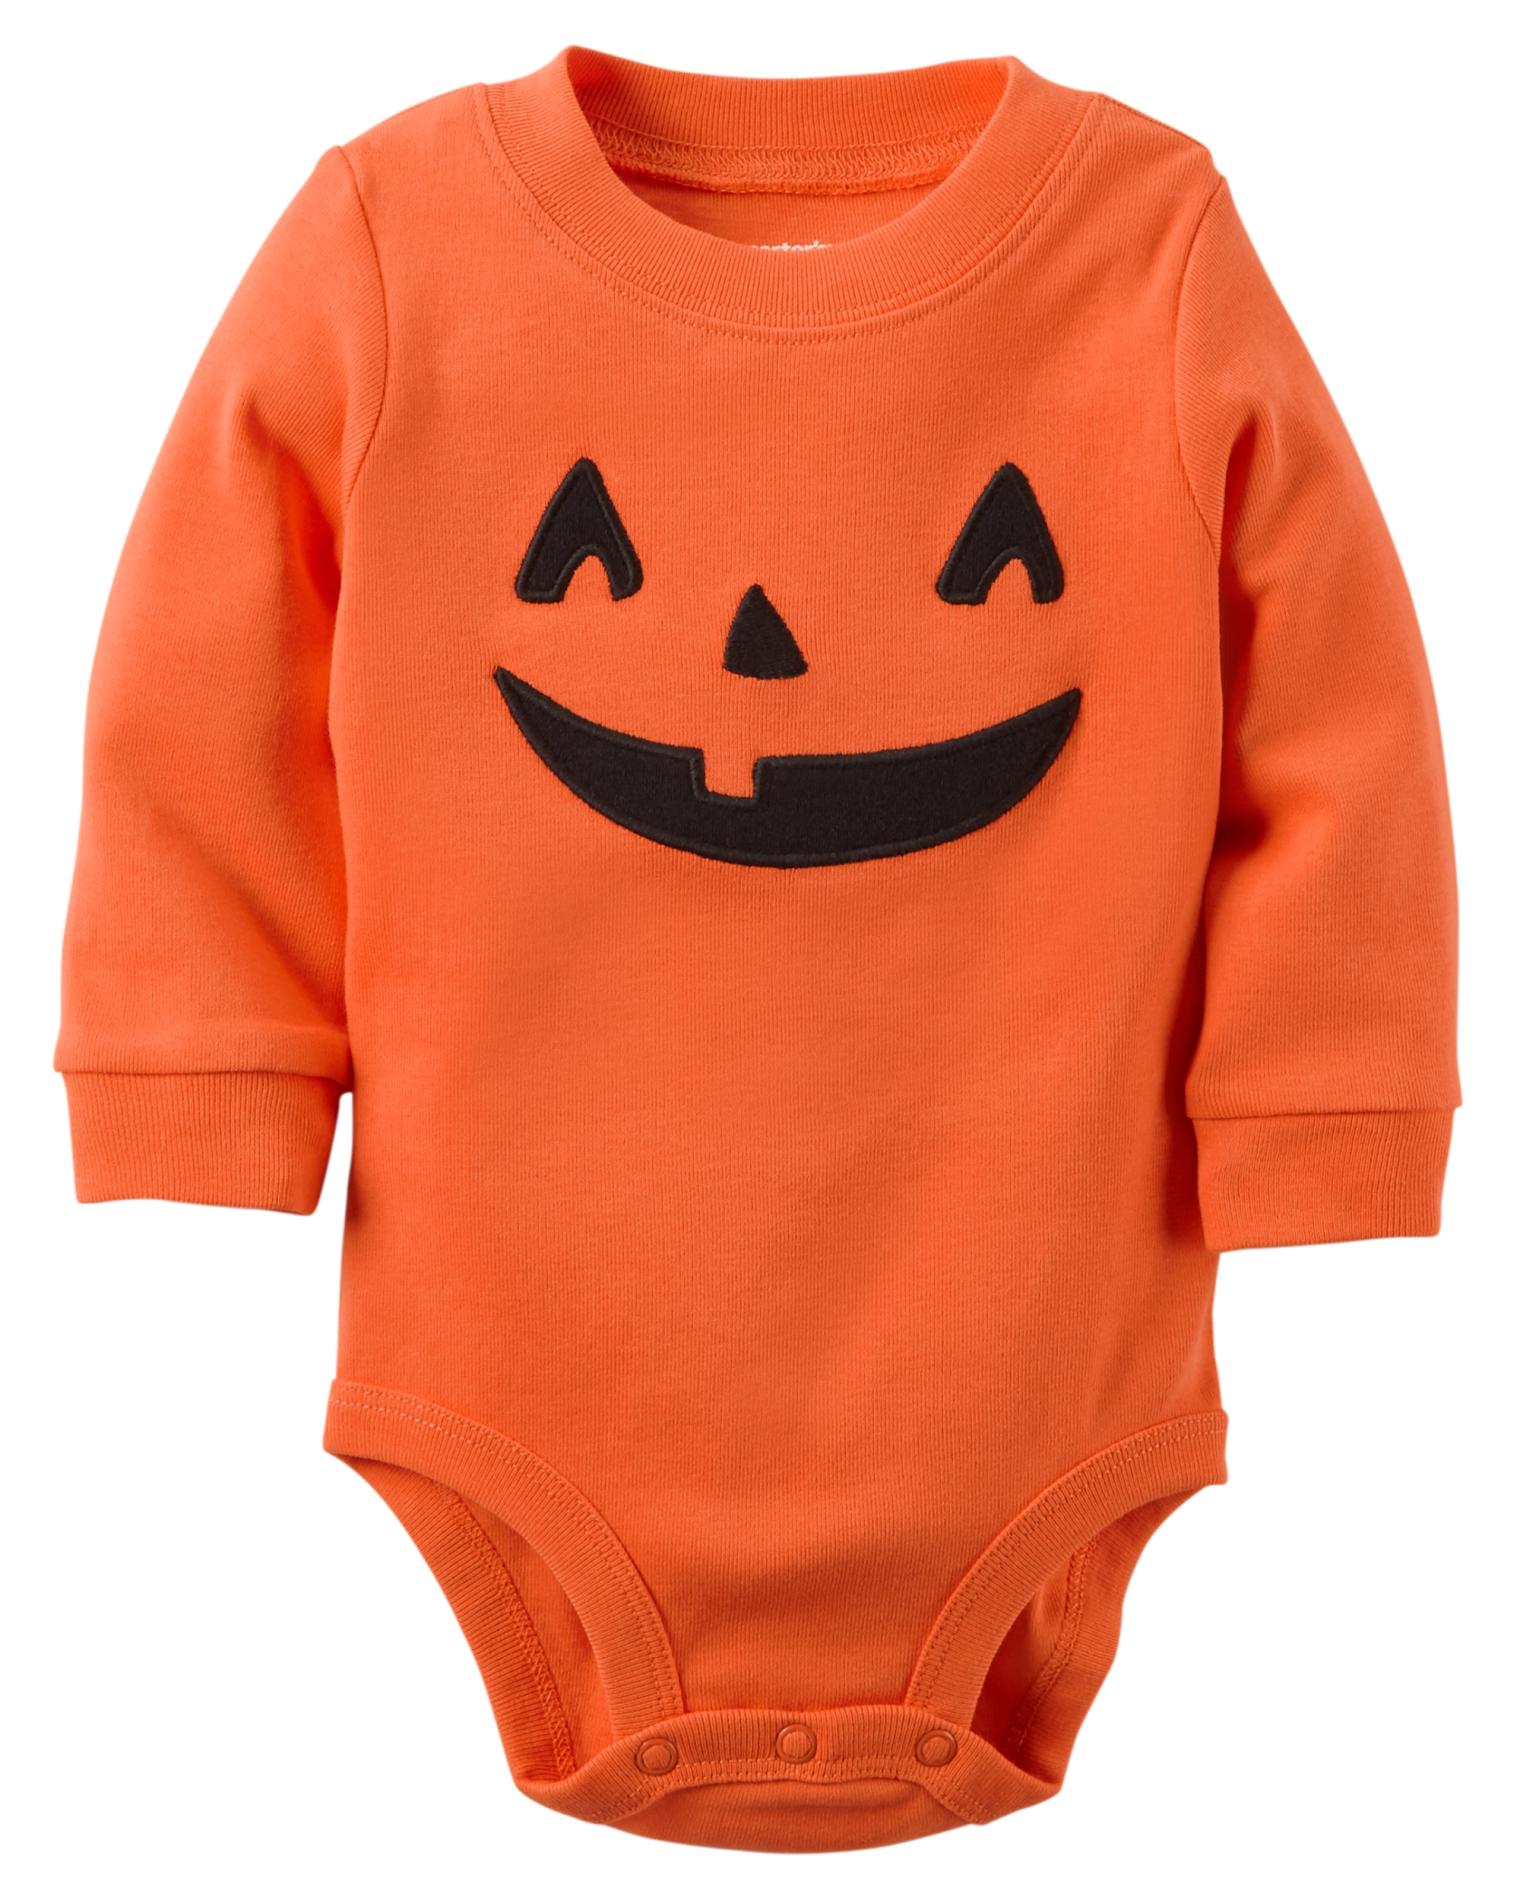 Carter's Newborn & Infants' Halloween Costume Bodysuit - Jack-o'-Lantern